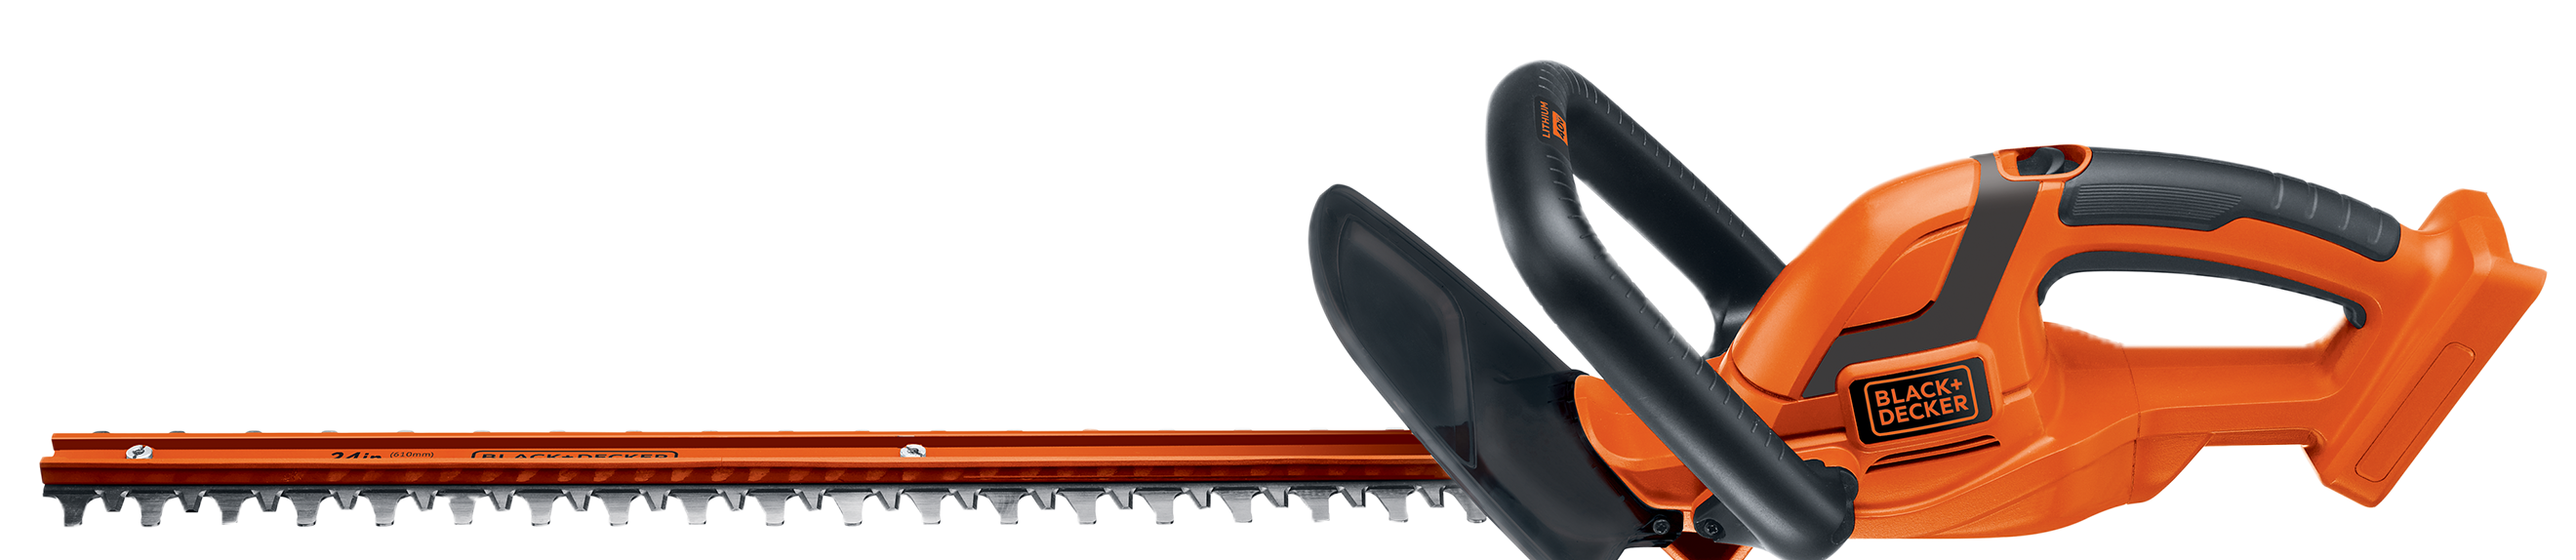 Black + Decker 60V Max Cordless Hedge Trimmer review